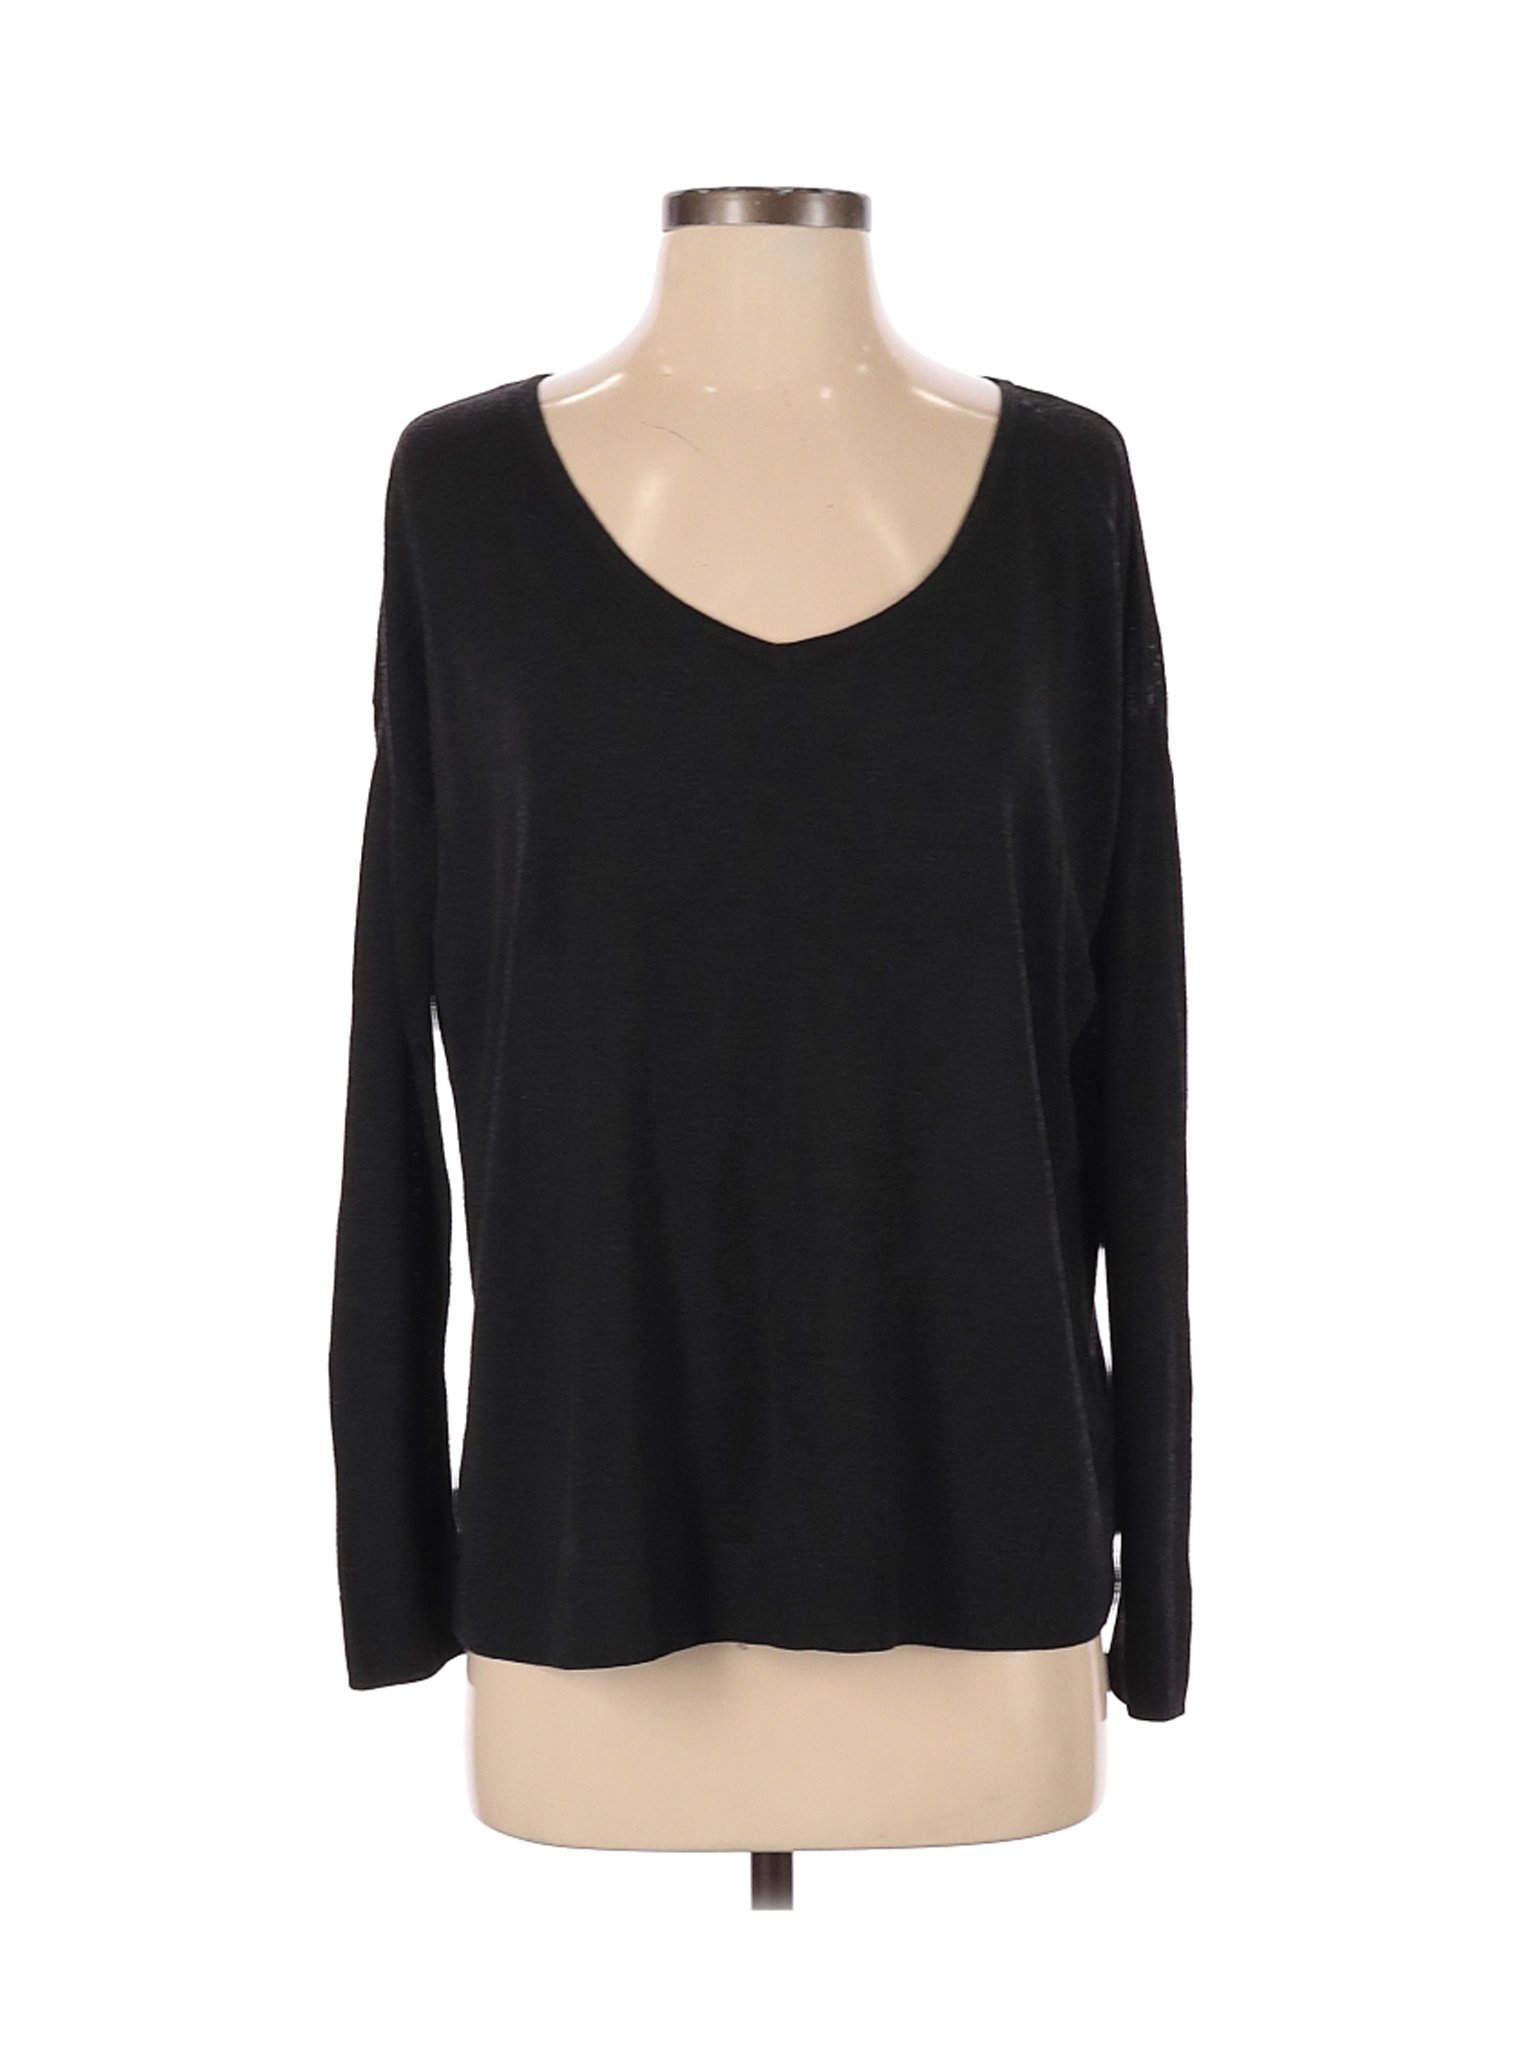 H&M Women Black Pullover Sweater S | eBay